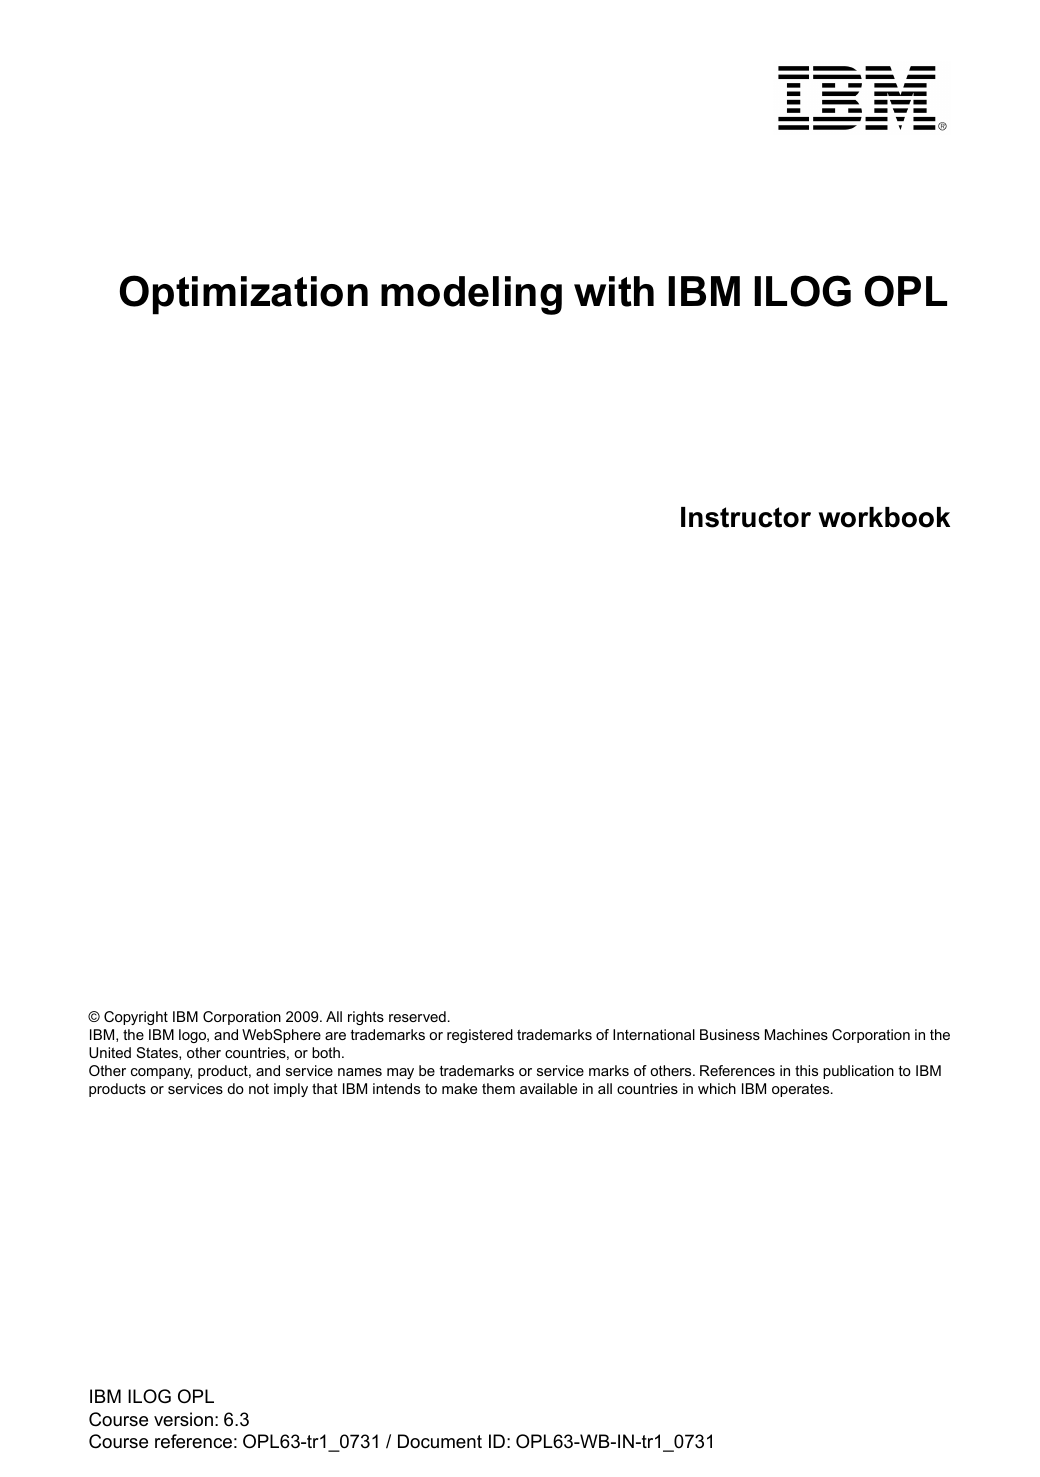 ibm ilog cplex optimization studio windows download student version